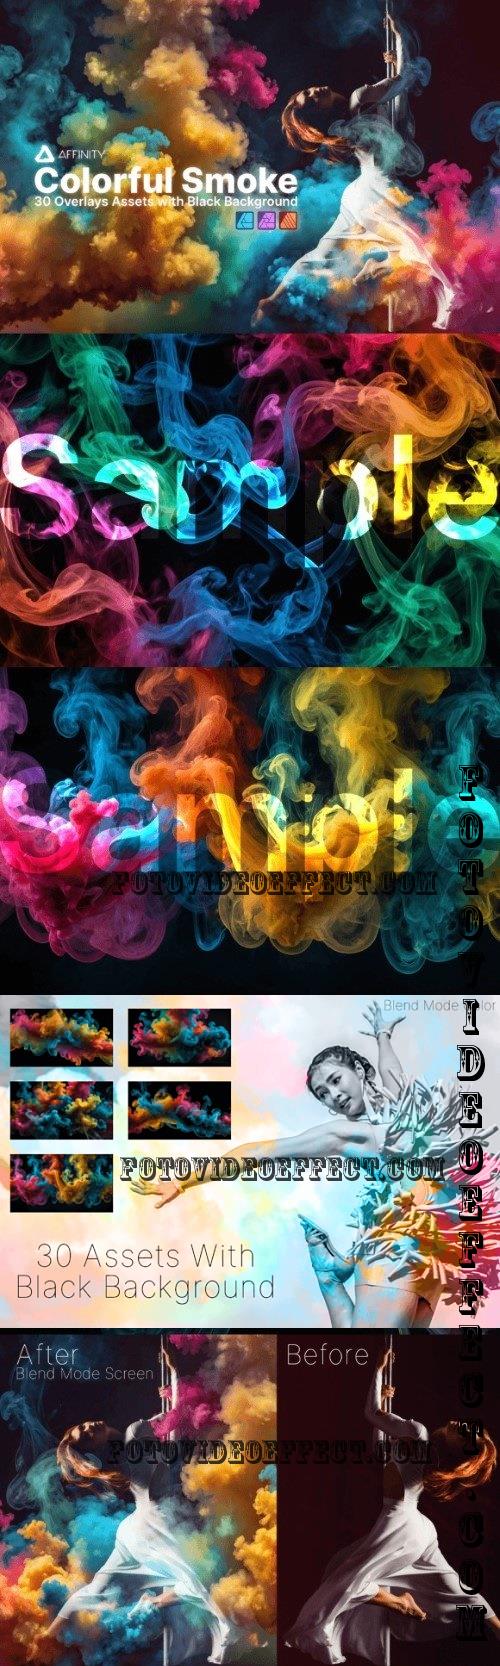 Affinity Assets Colourful Smoke Overlays